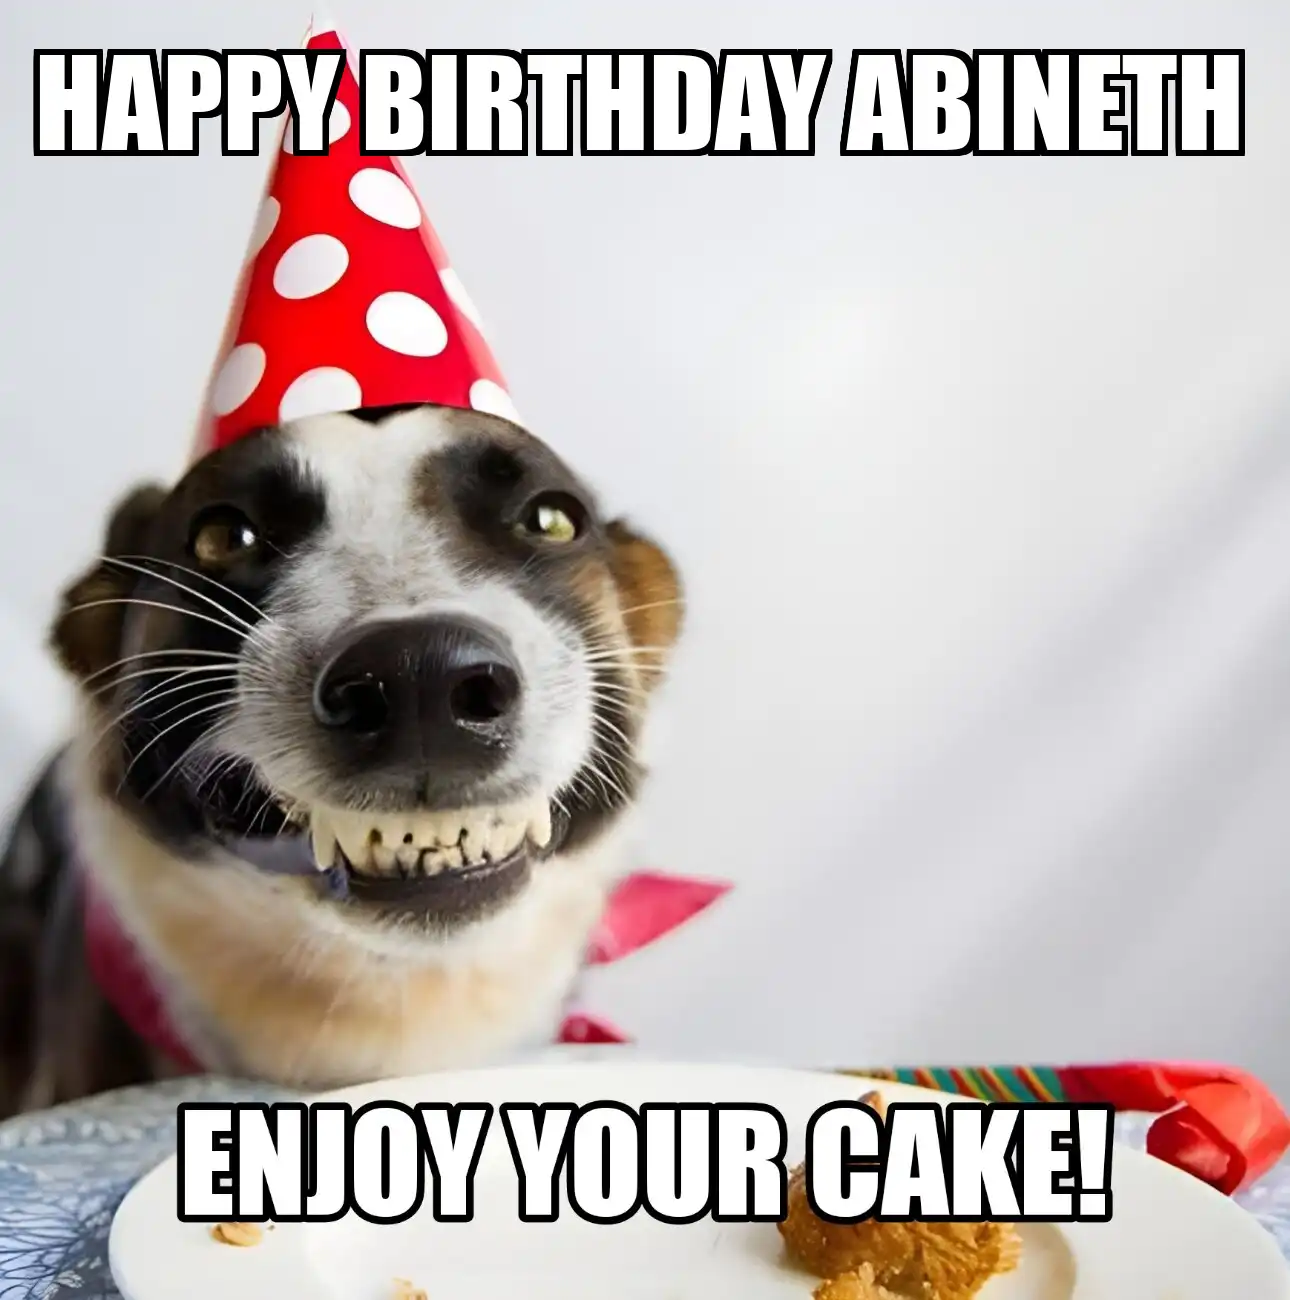 Happy Birthday Abineth Enjoy Your Cake Dog Meme